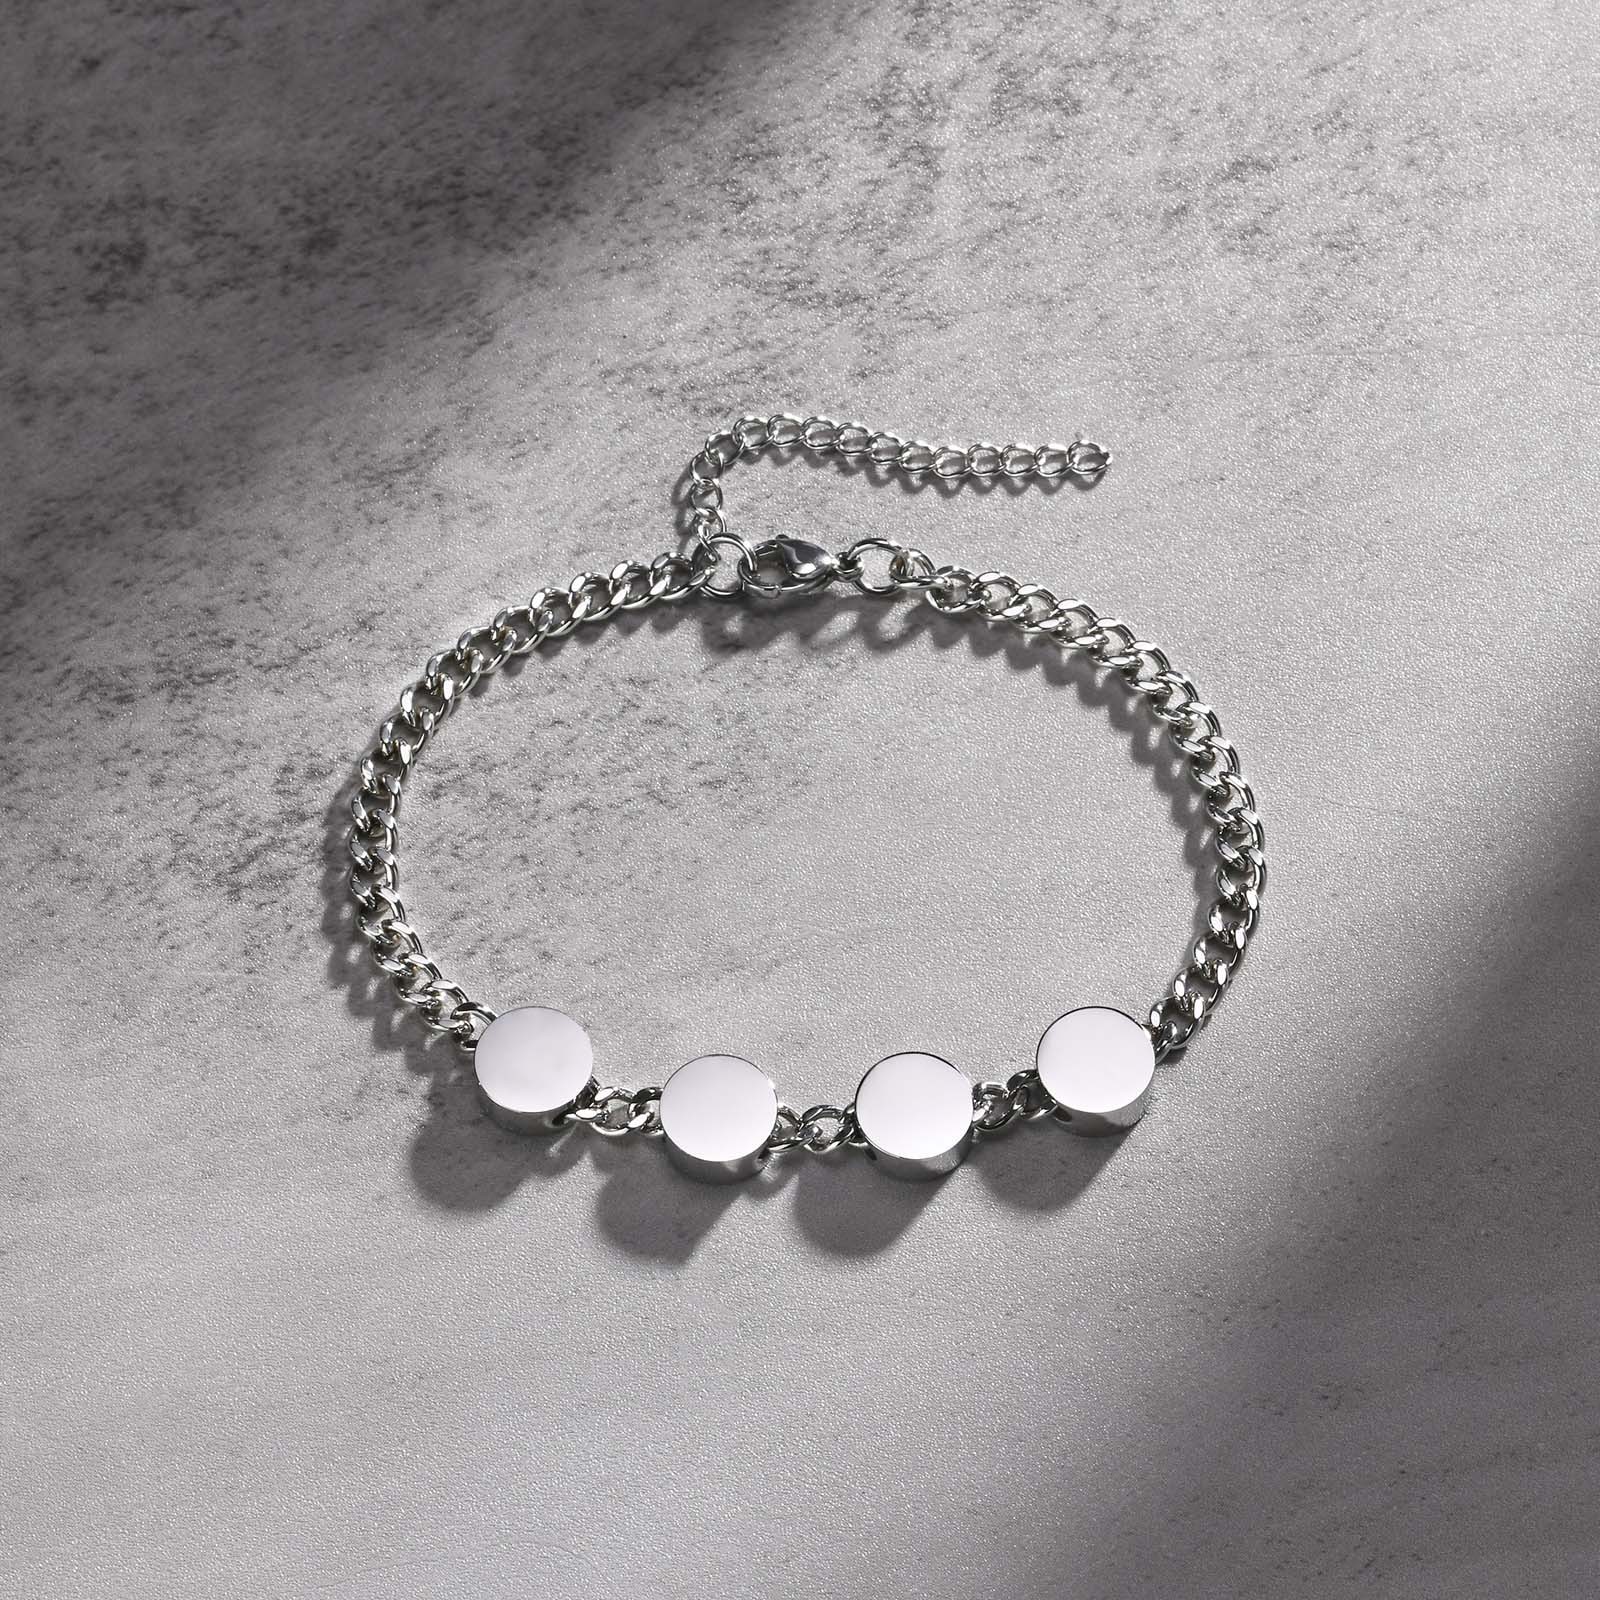 4 accessory [blank] bracelet